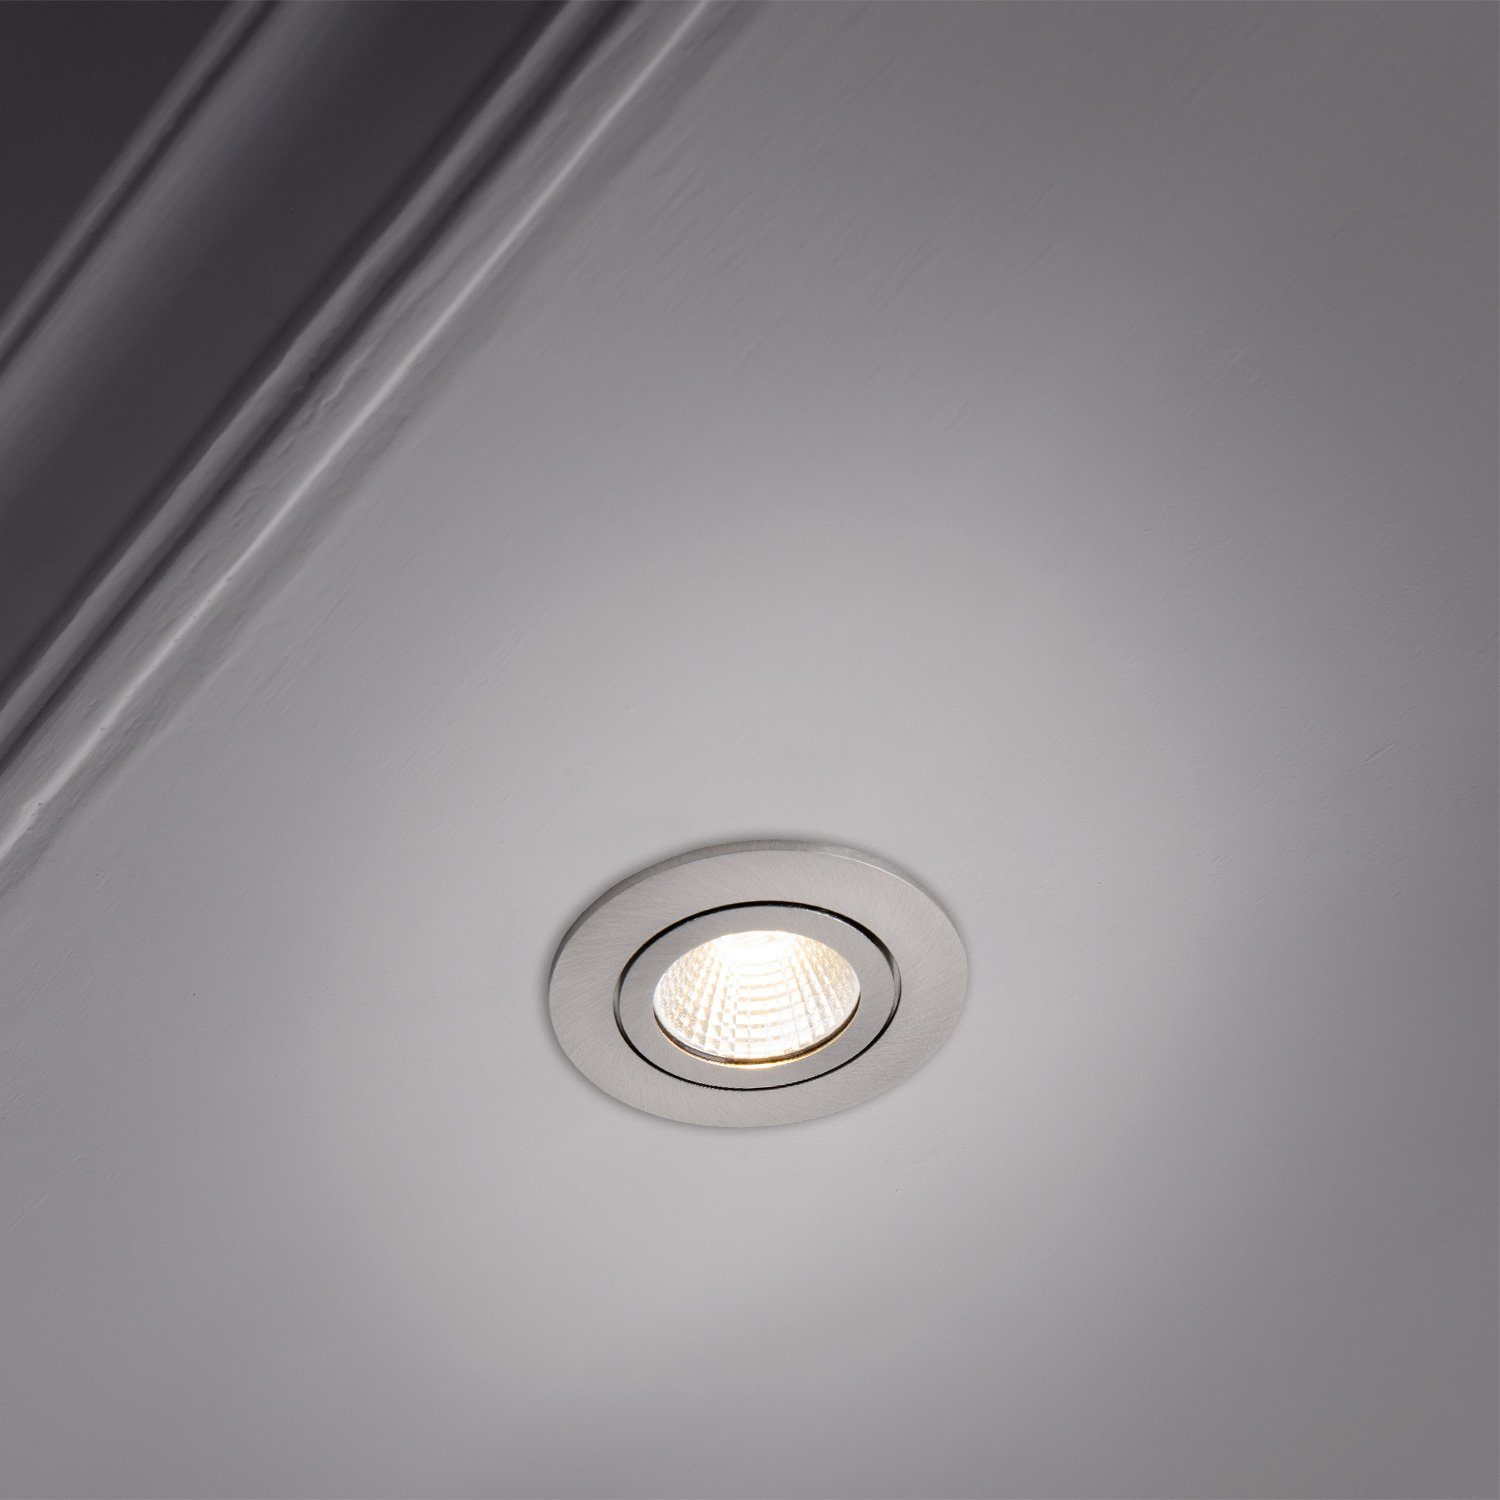 Paco LED dimmbar Spotlight Flach Home Einbauleuchte LED wechselbar, LED Warmweiß, Strahler Schwenkbar Einbaustrahler Rita,